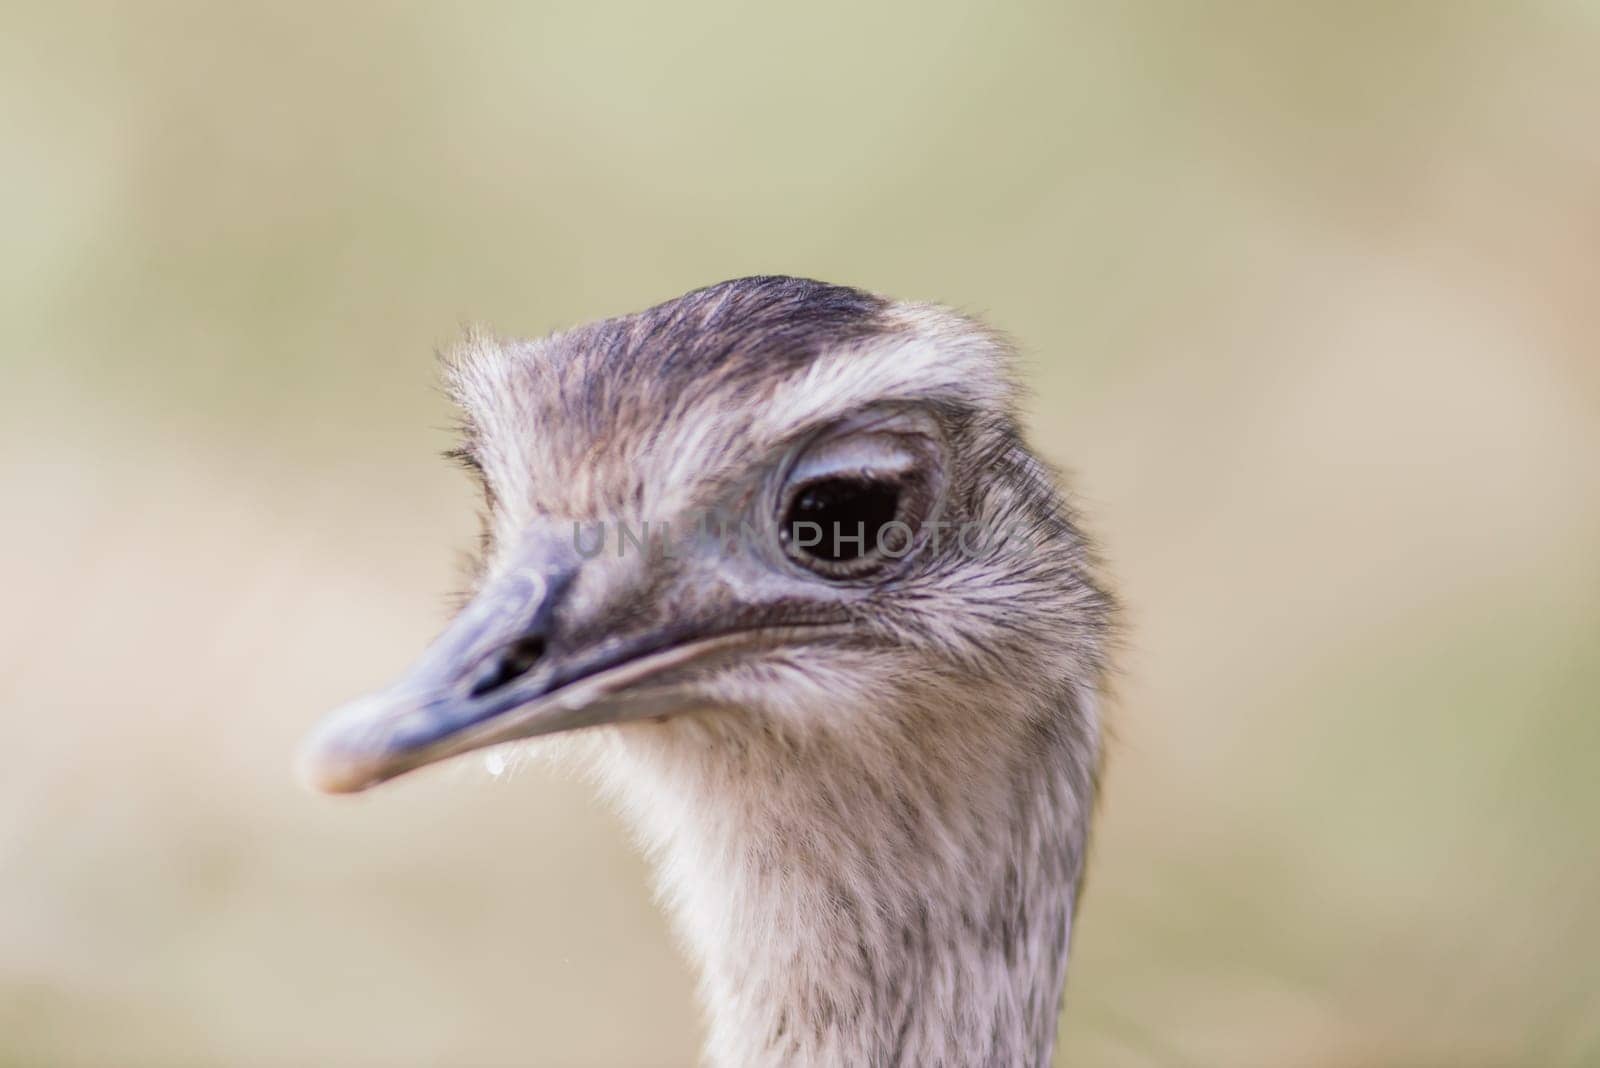 Ostrich head close up, autumn weather park outdoors by Zelenin